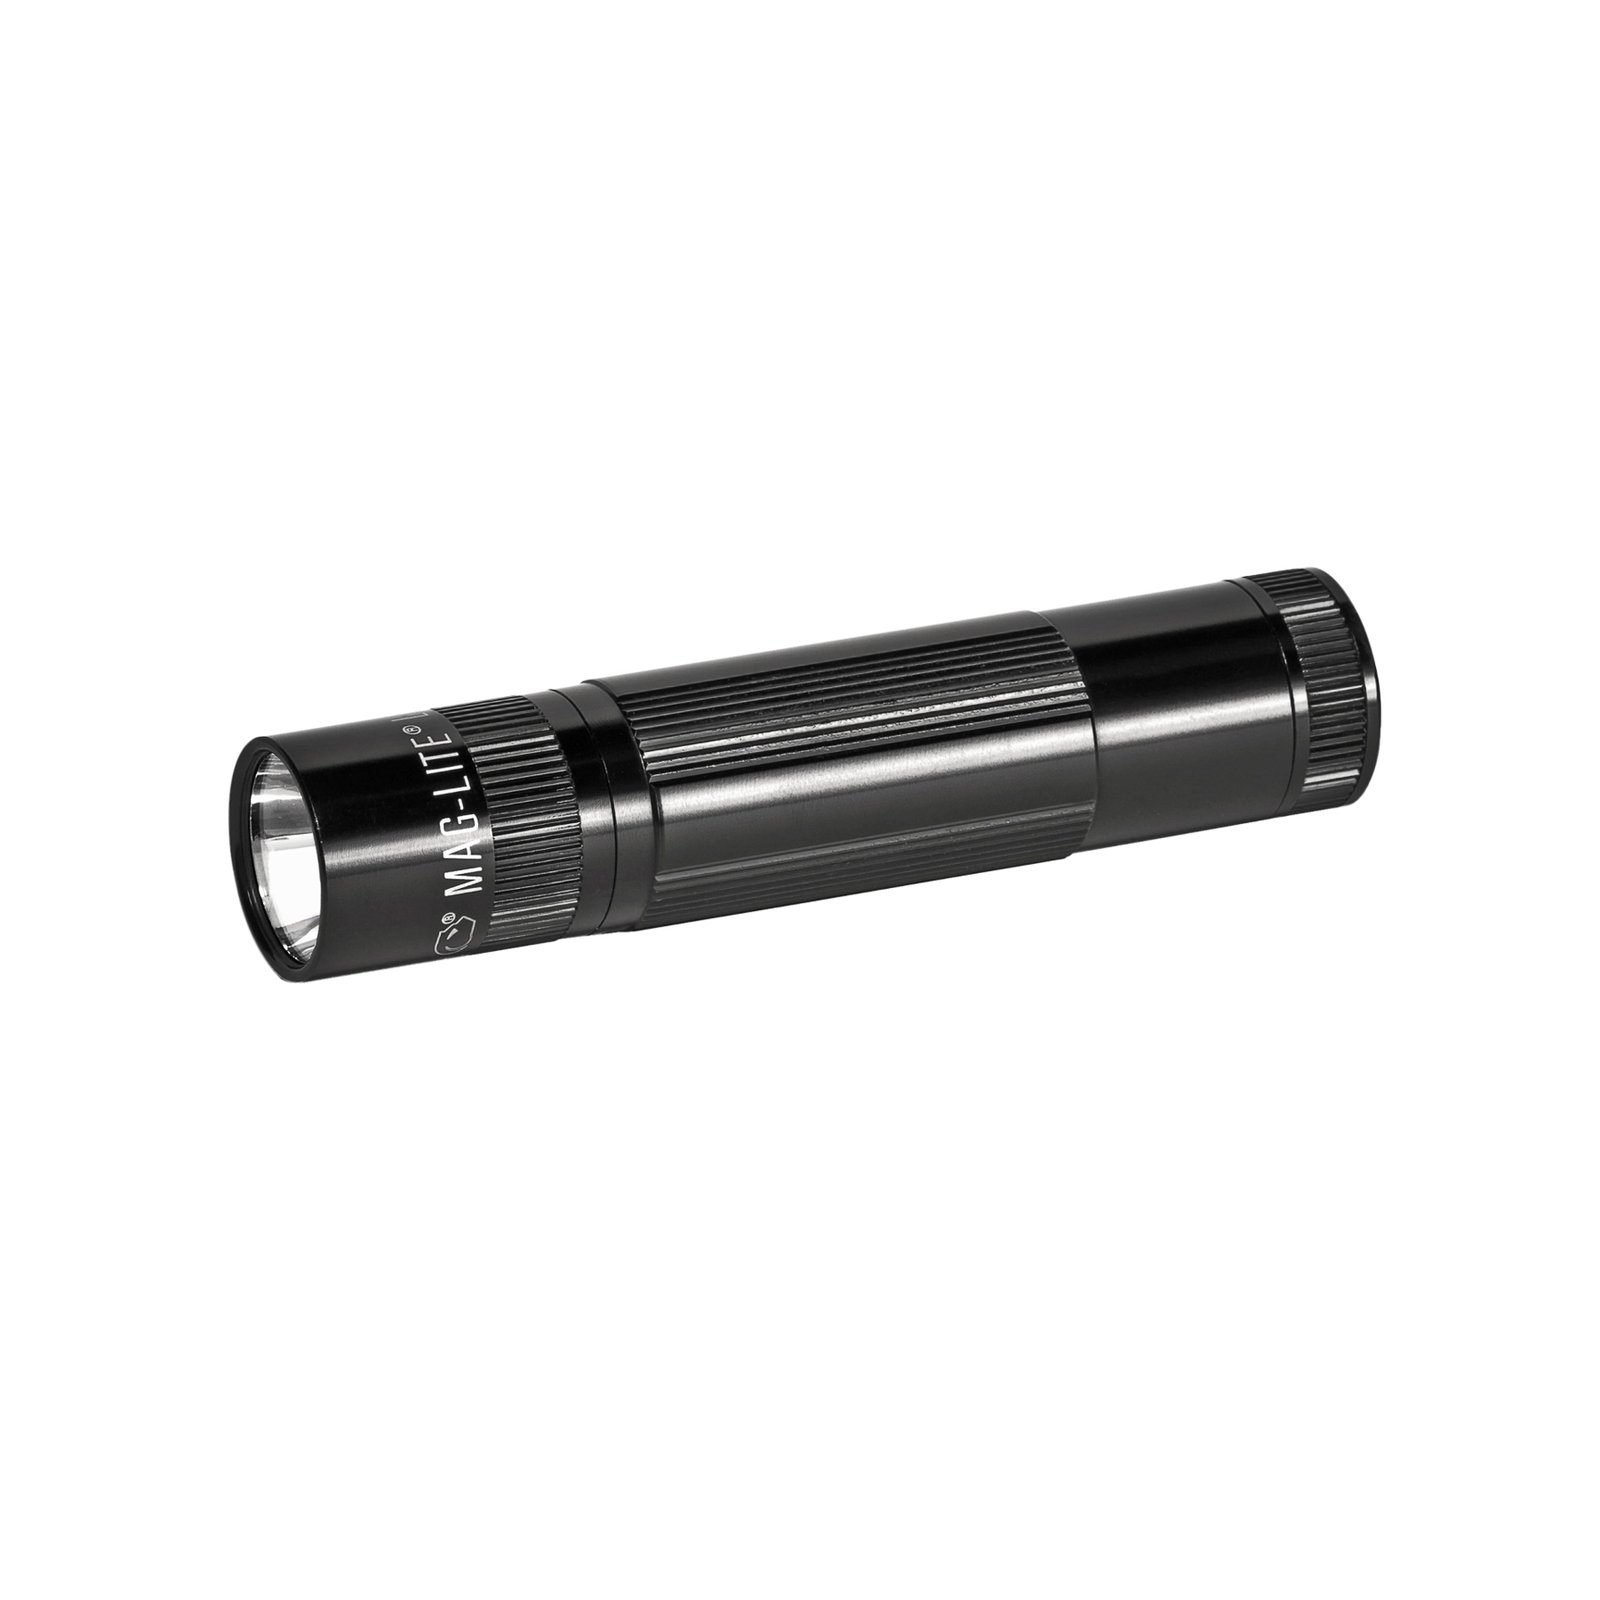 Maglite LED-Taschenlampe XL200, 3-Cell AAA, schwarz